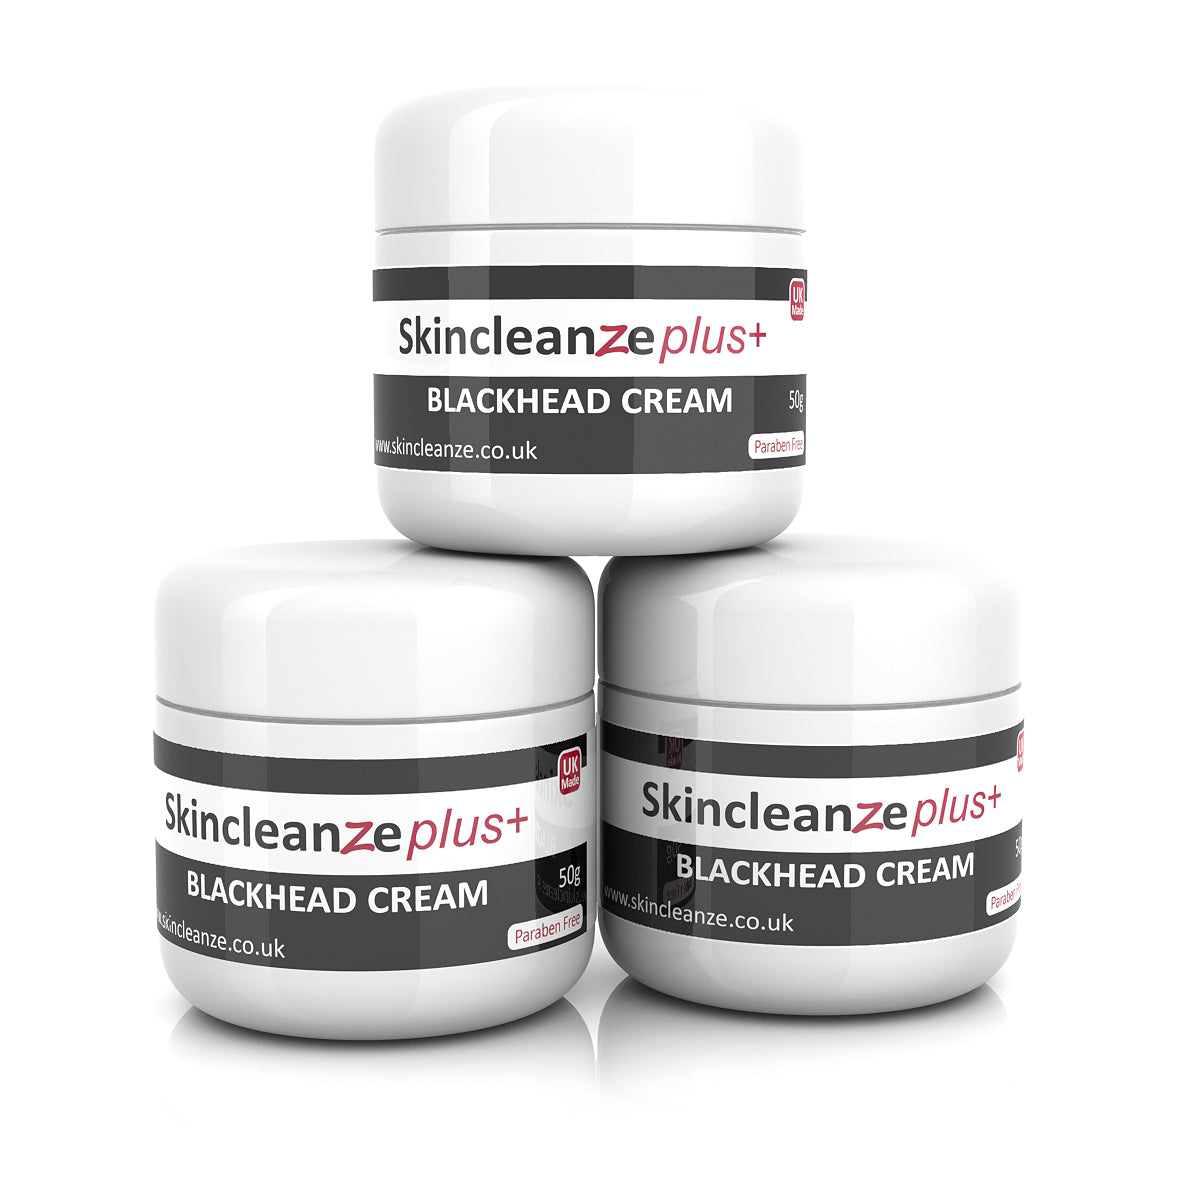 Skincleanze plus+ Blackhead Cream Double Strength (Pack of 3x 50g)